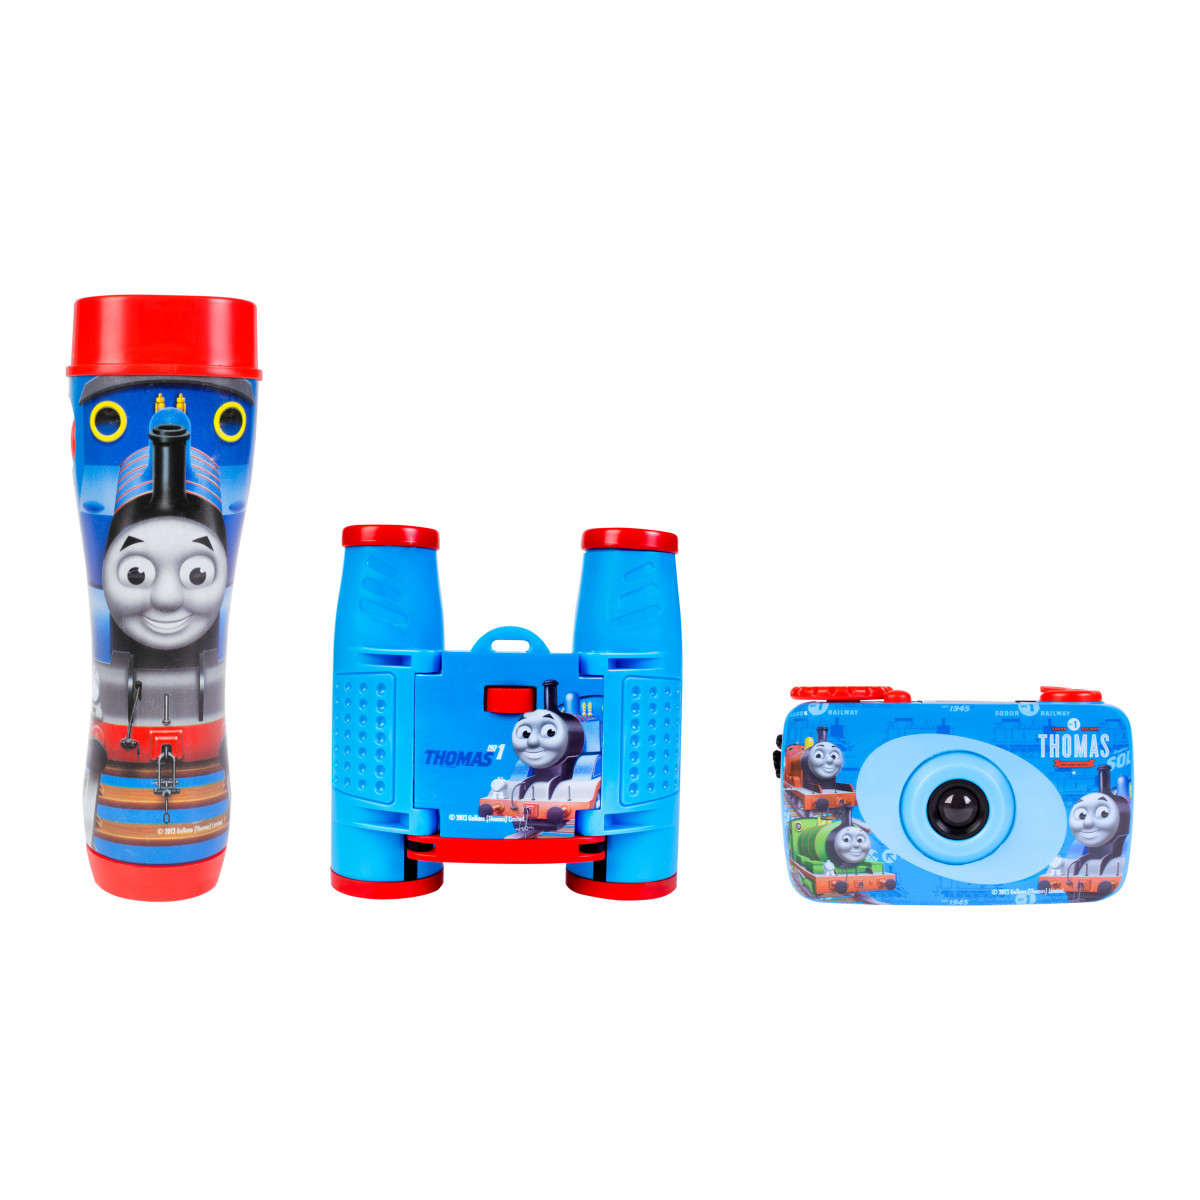 26085 Thomas Train Kit With Camera, Binocular & Flashlight - Multicolor - 3 Piece